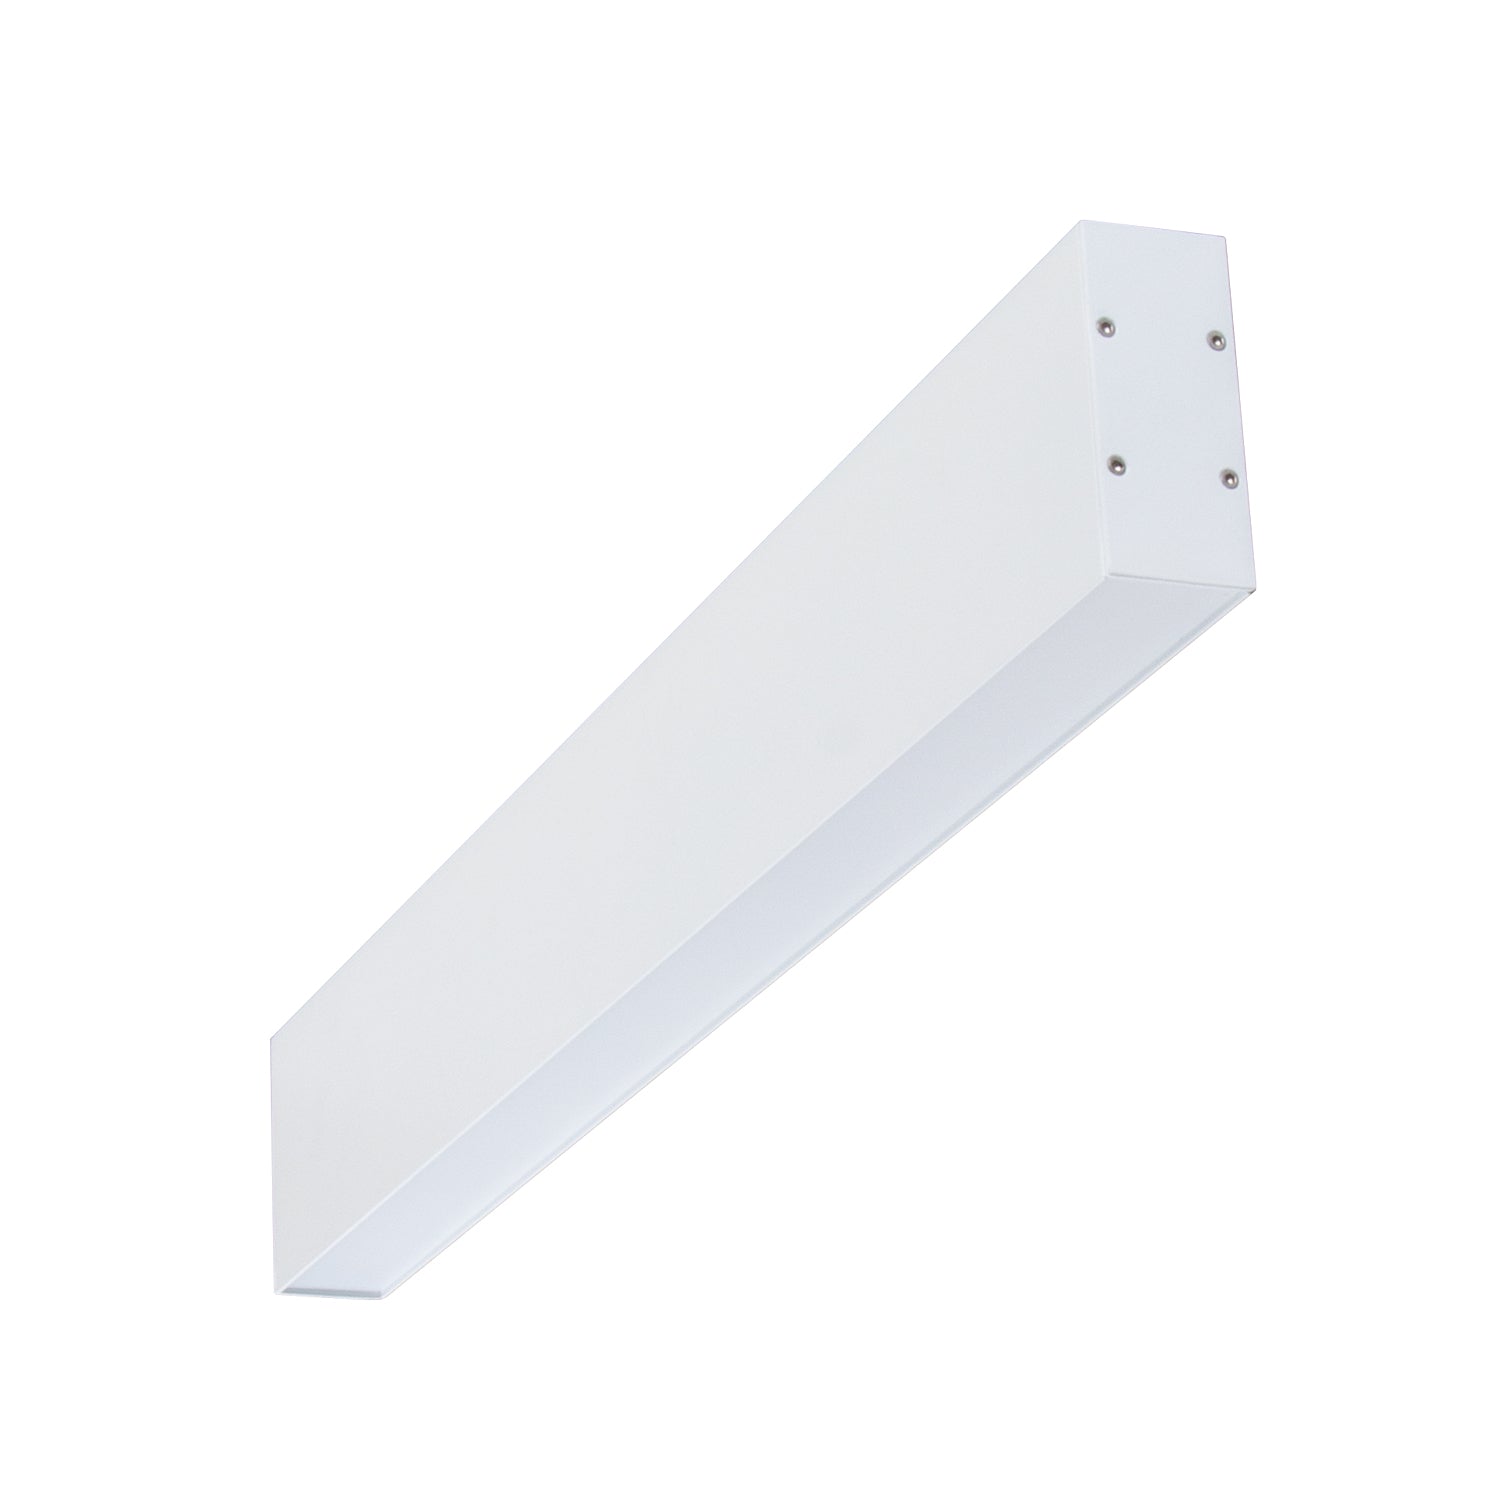 Domus Lighting Indoor Wall Lights White / 4000K LUMALINE-2-300 LED WALL LIGHT Lights-For-You 23588